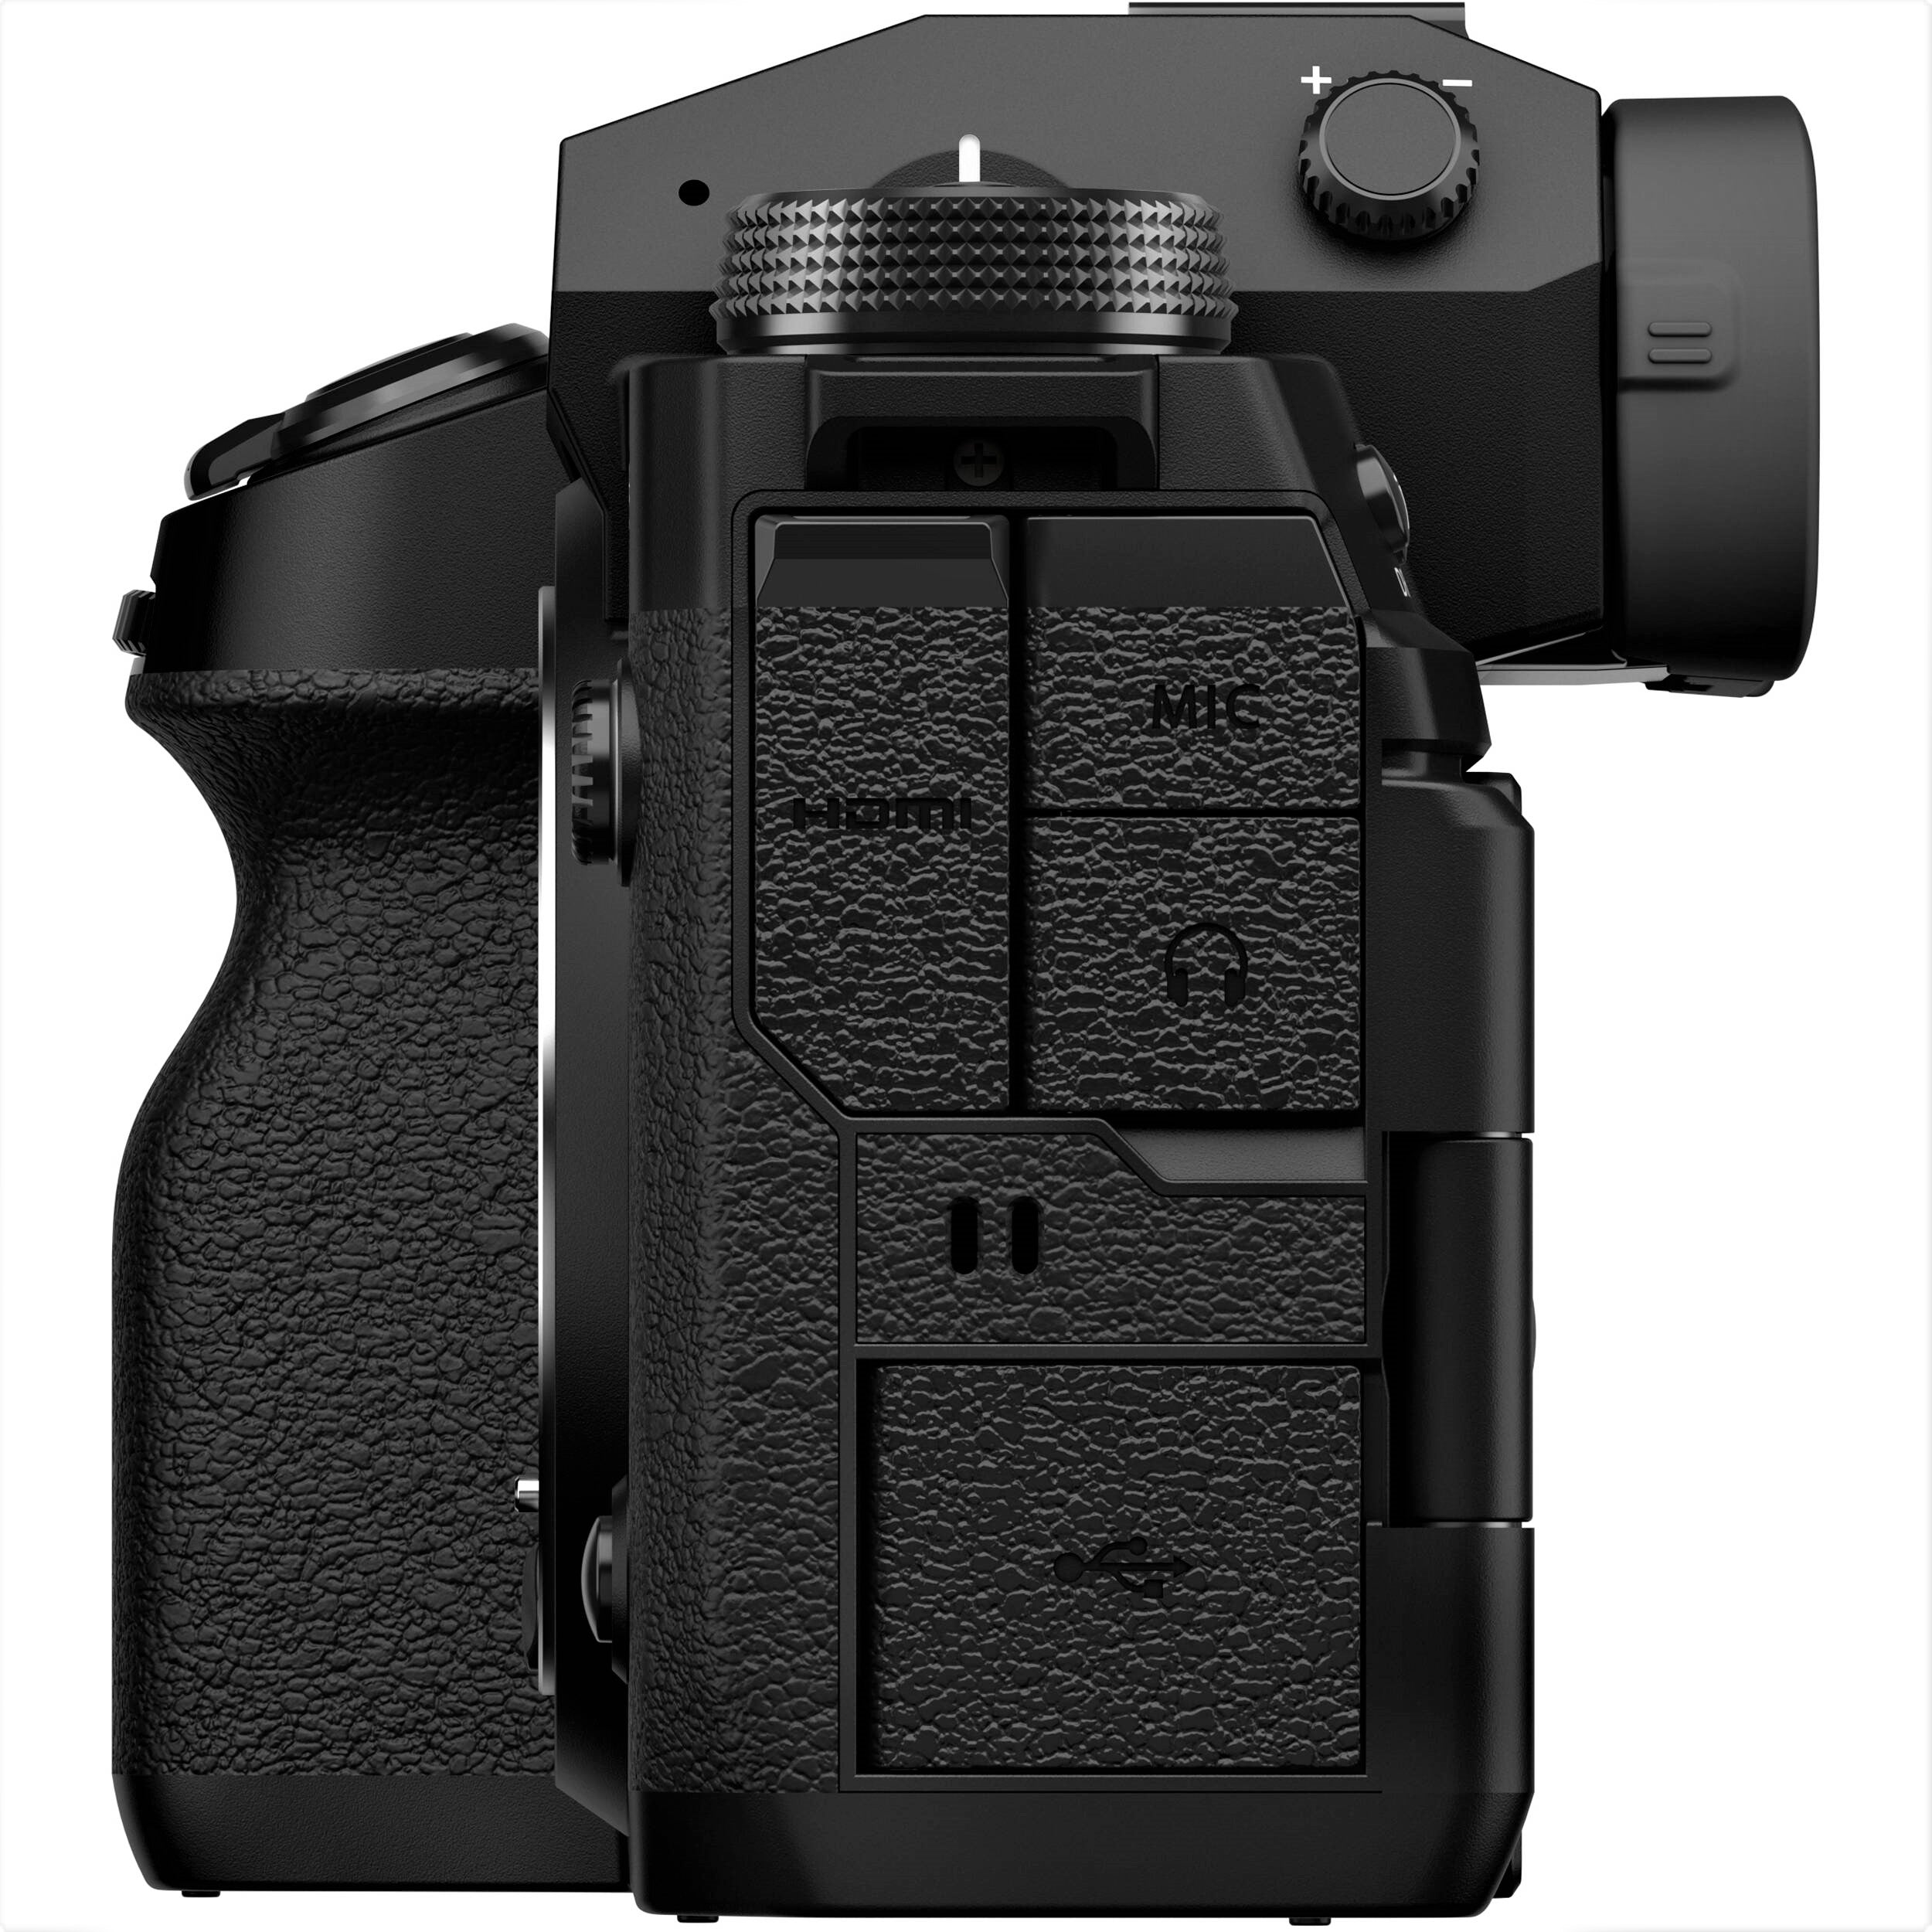 Fujifilm X-H2 Mirrorless Camera - Side View